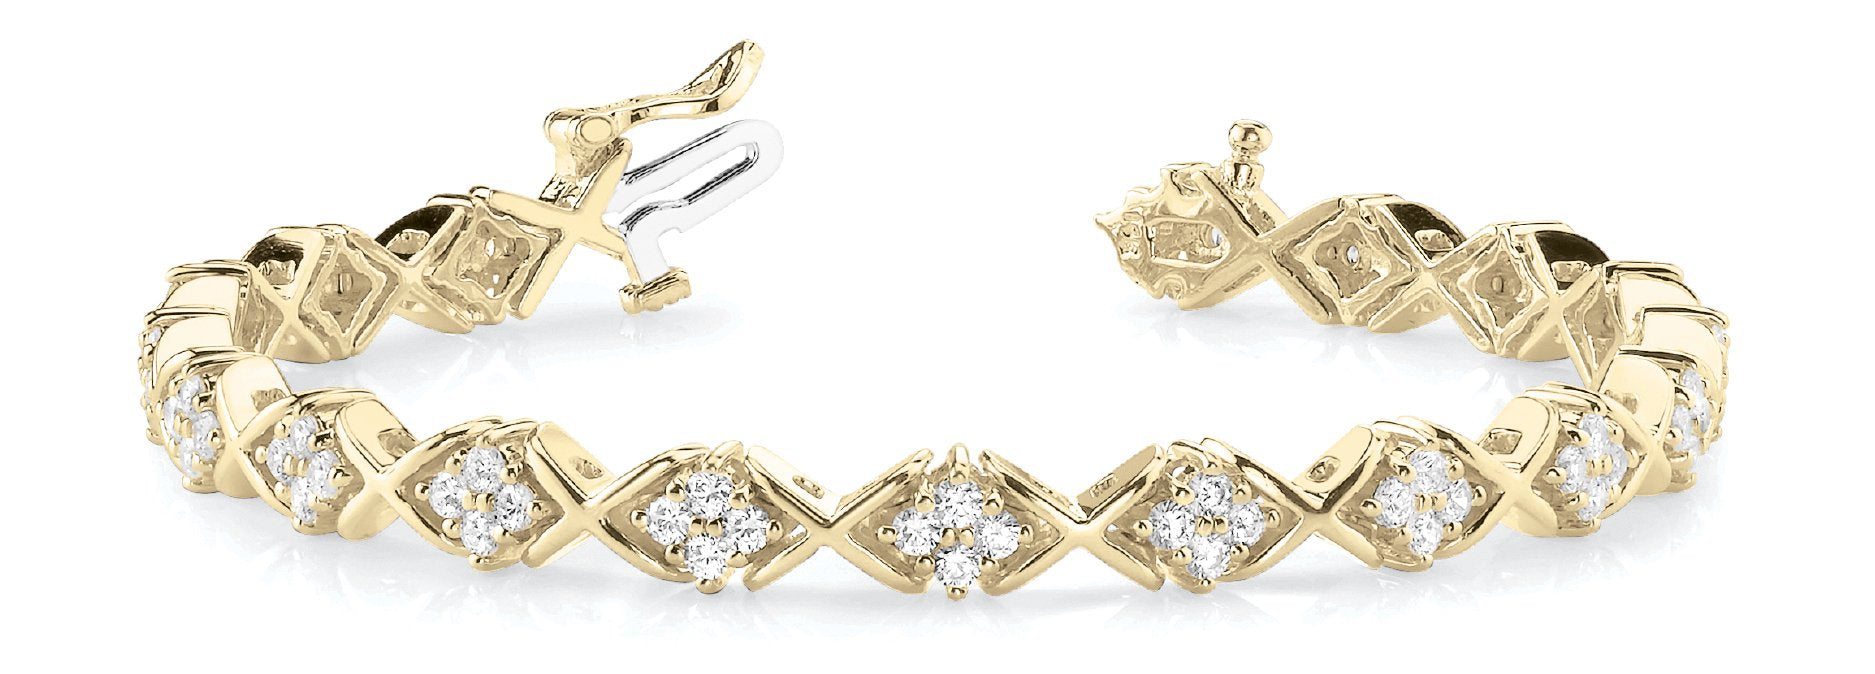 Fancy Diamond Bracelet Ladies 3.07ct tw - 14kt Yellow Gold